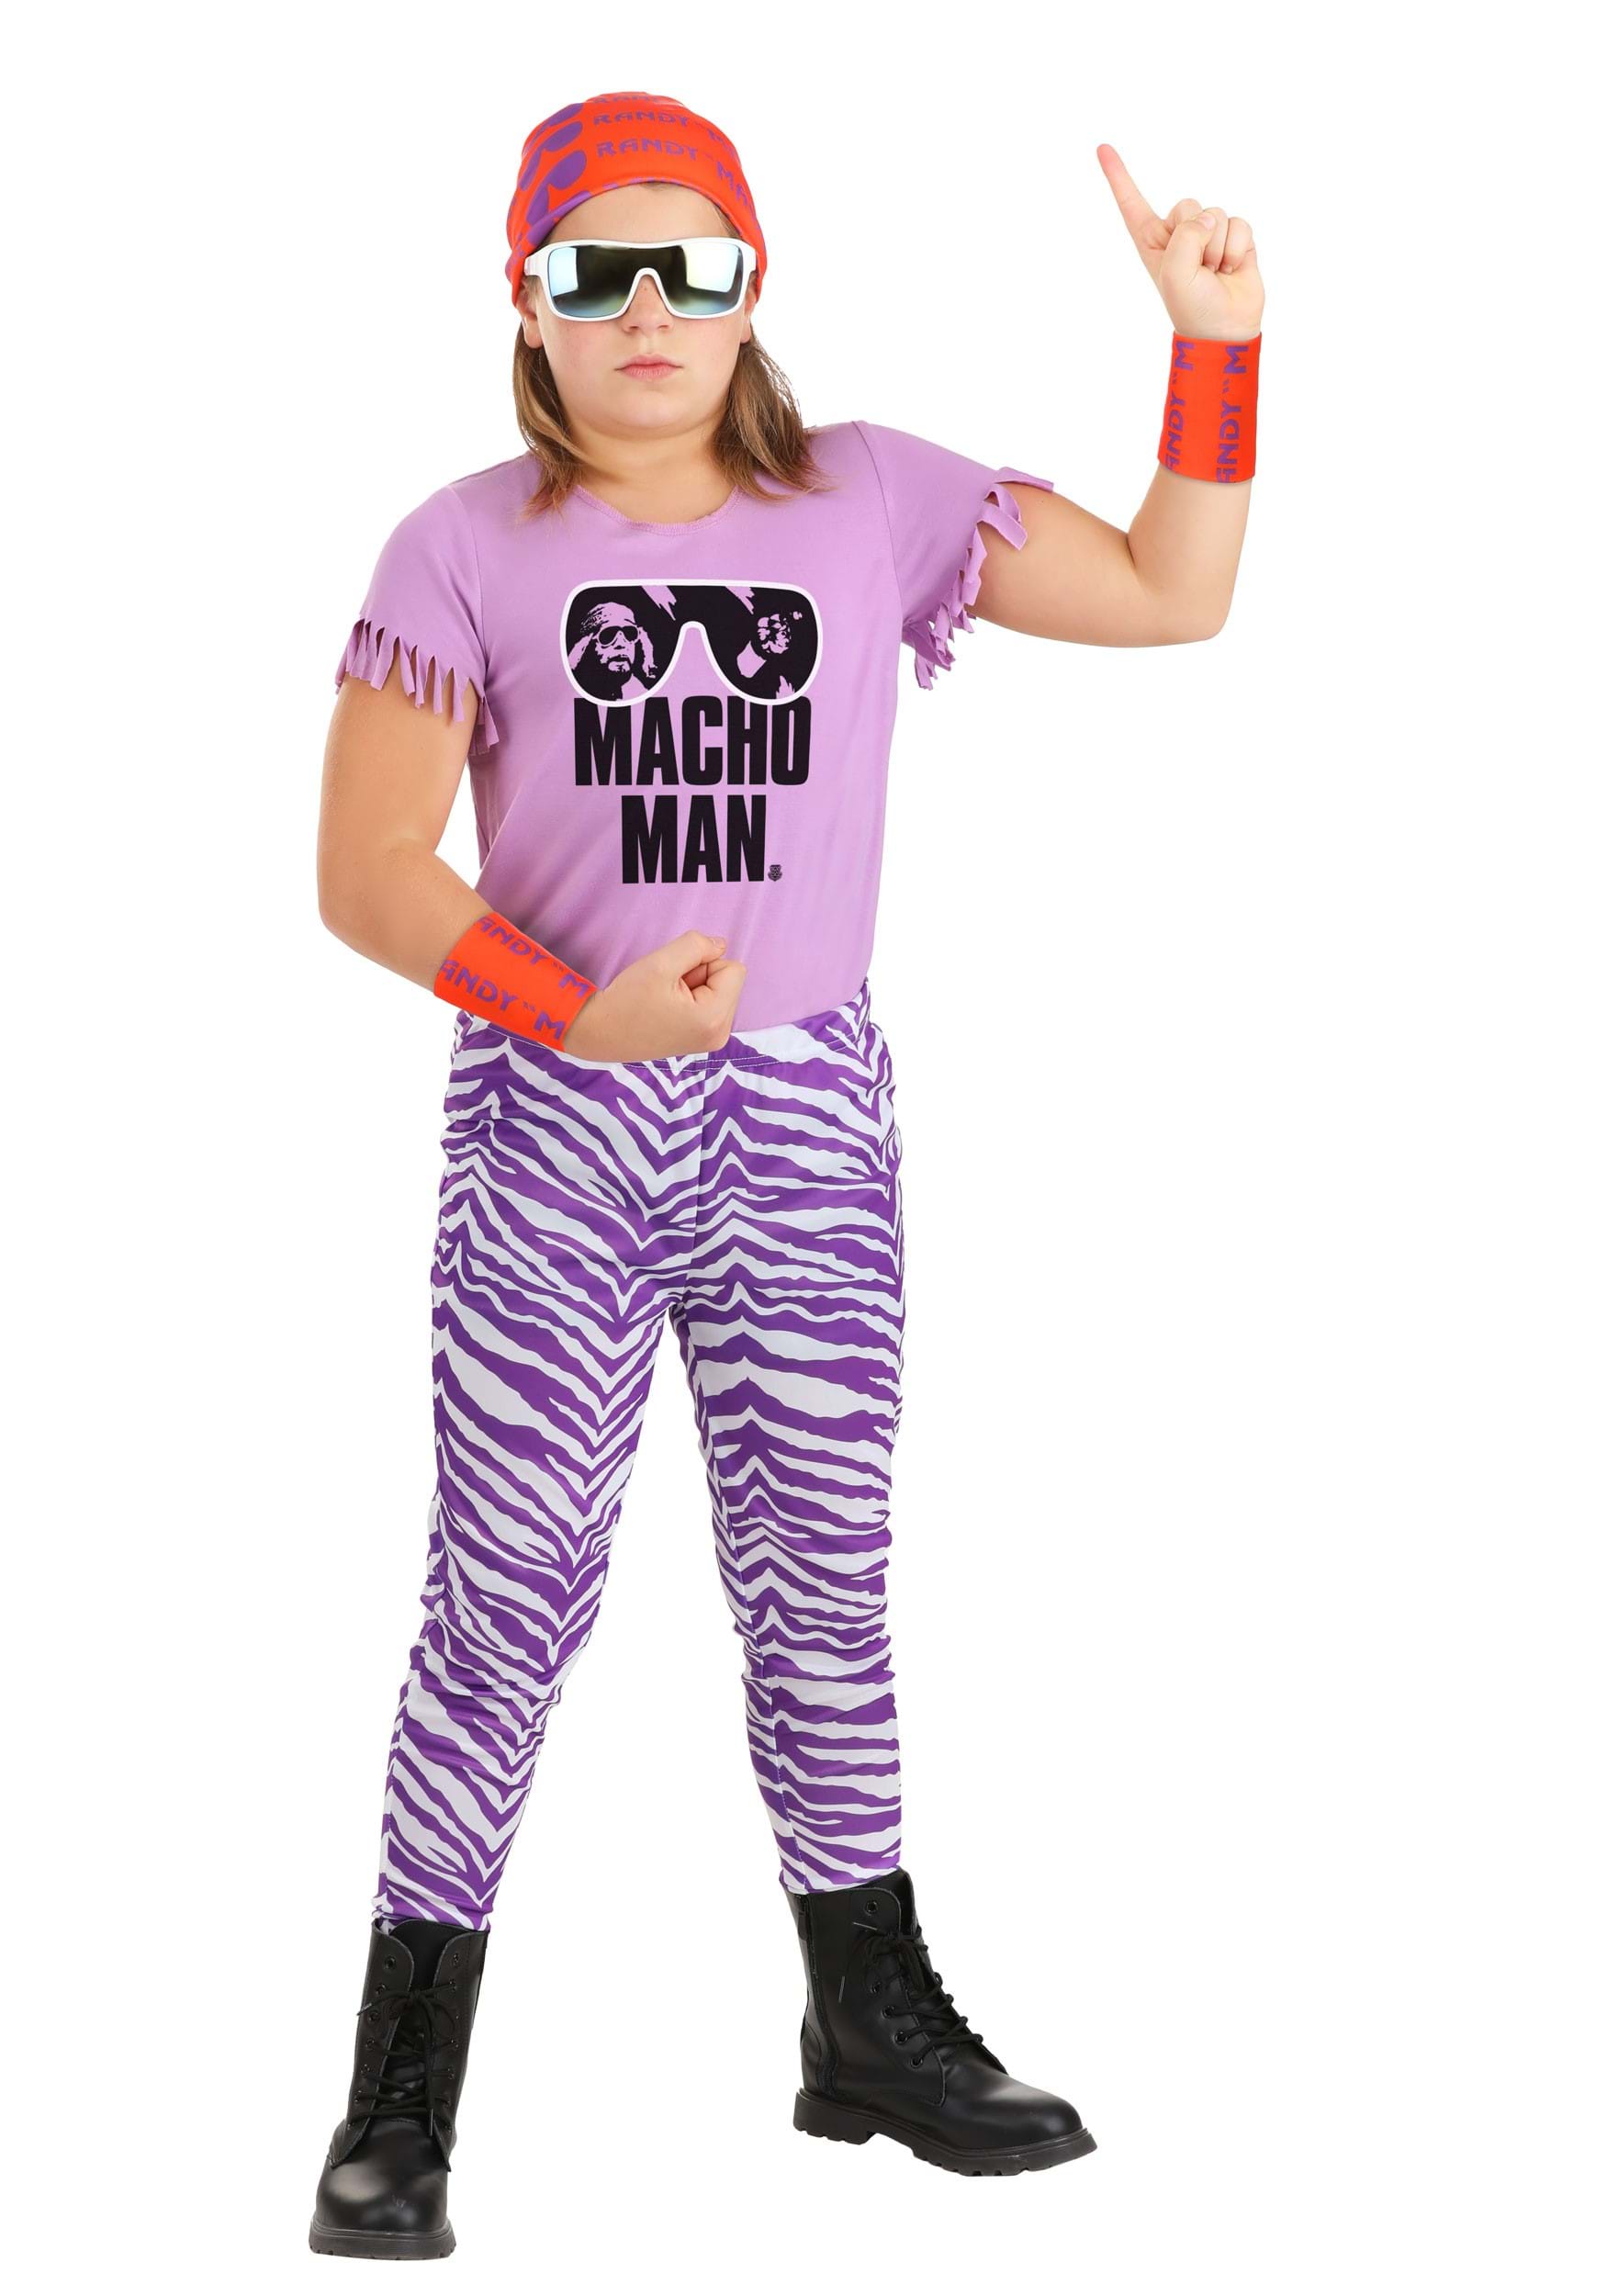 Photos - Fancy Dress WWE FUN Costumes  Macho Man Madness Costume For Kids Purple/White 